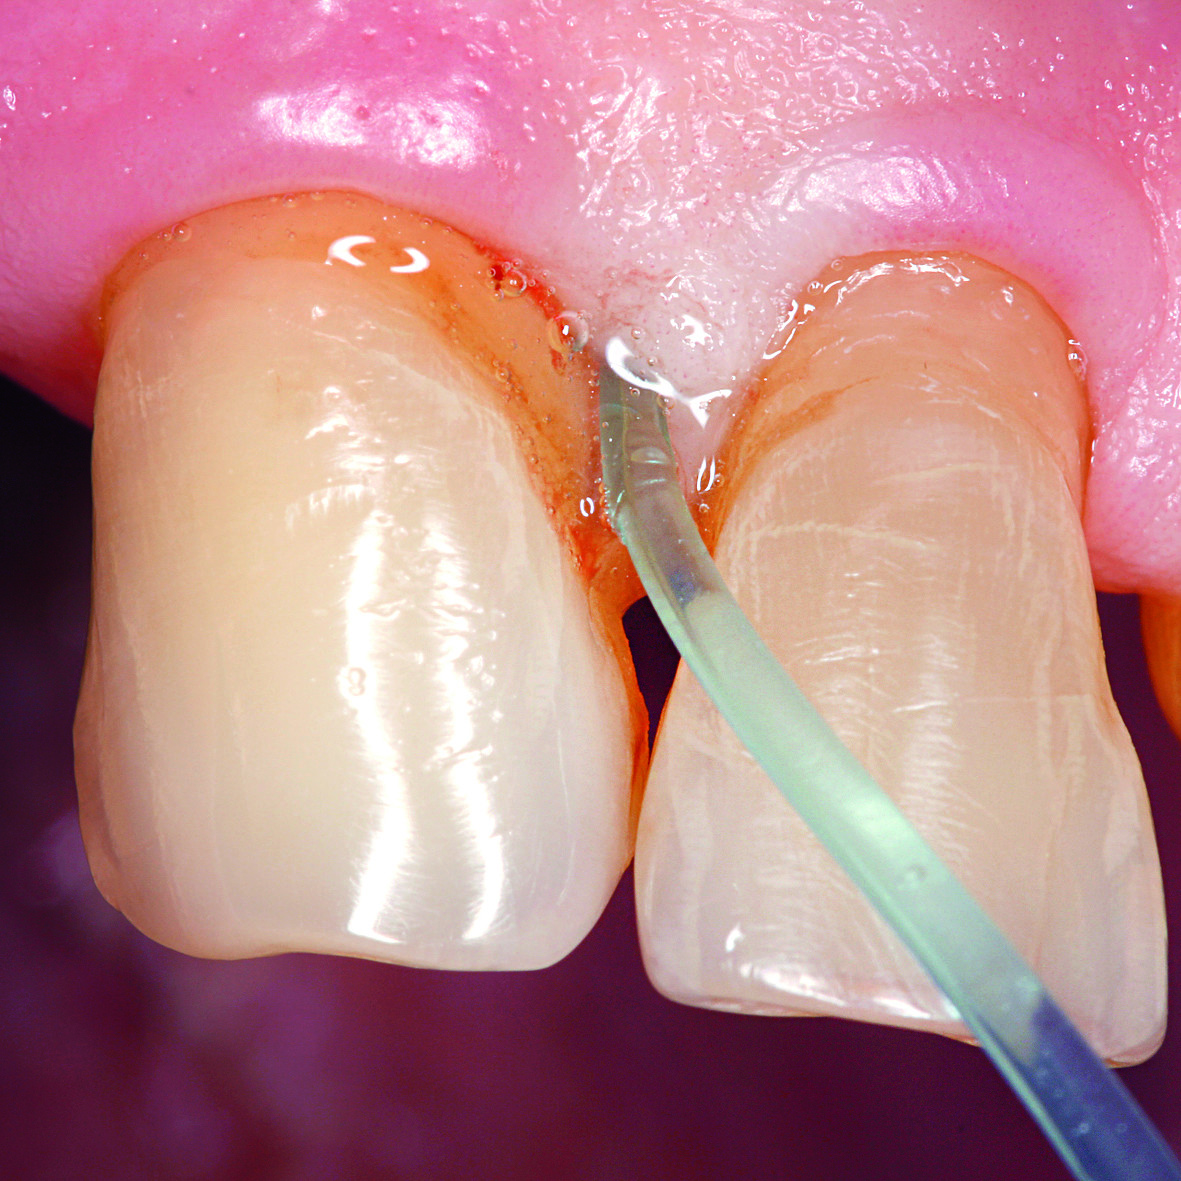 Application of Perisolv into periodontal pocket